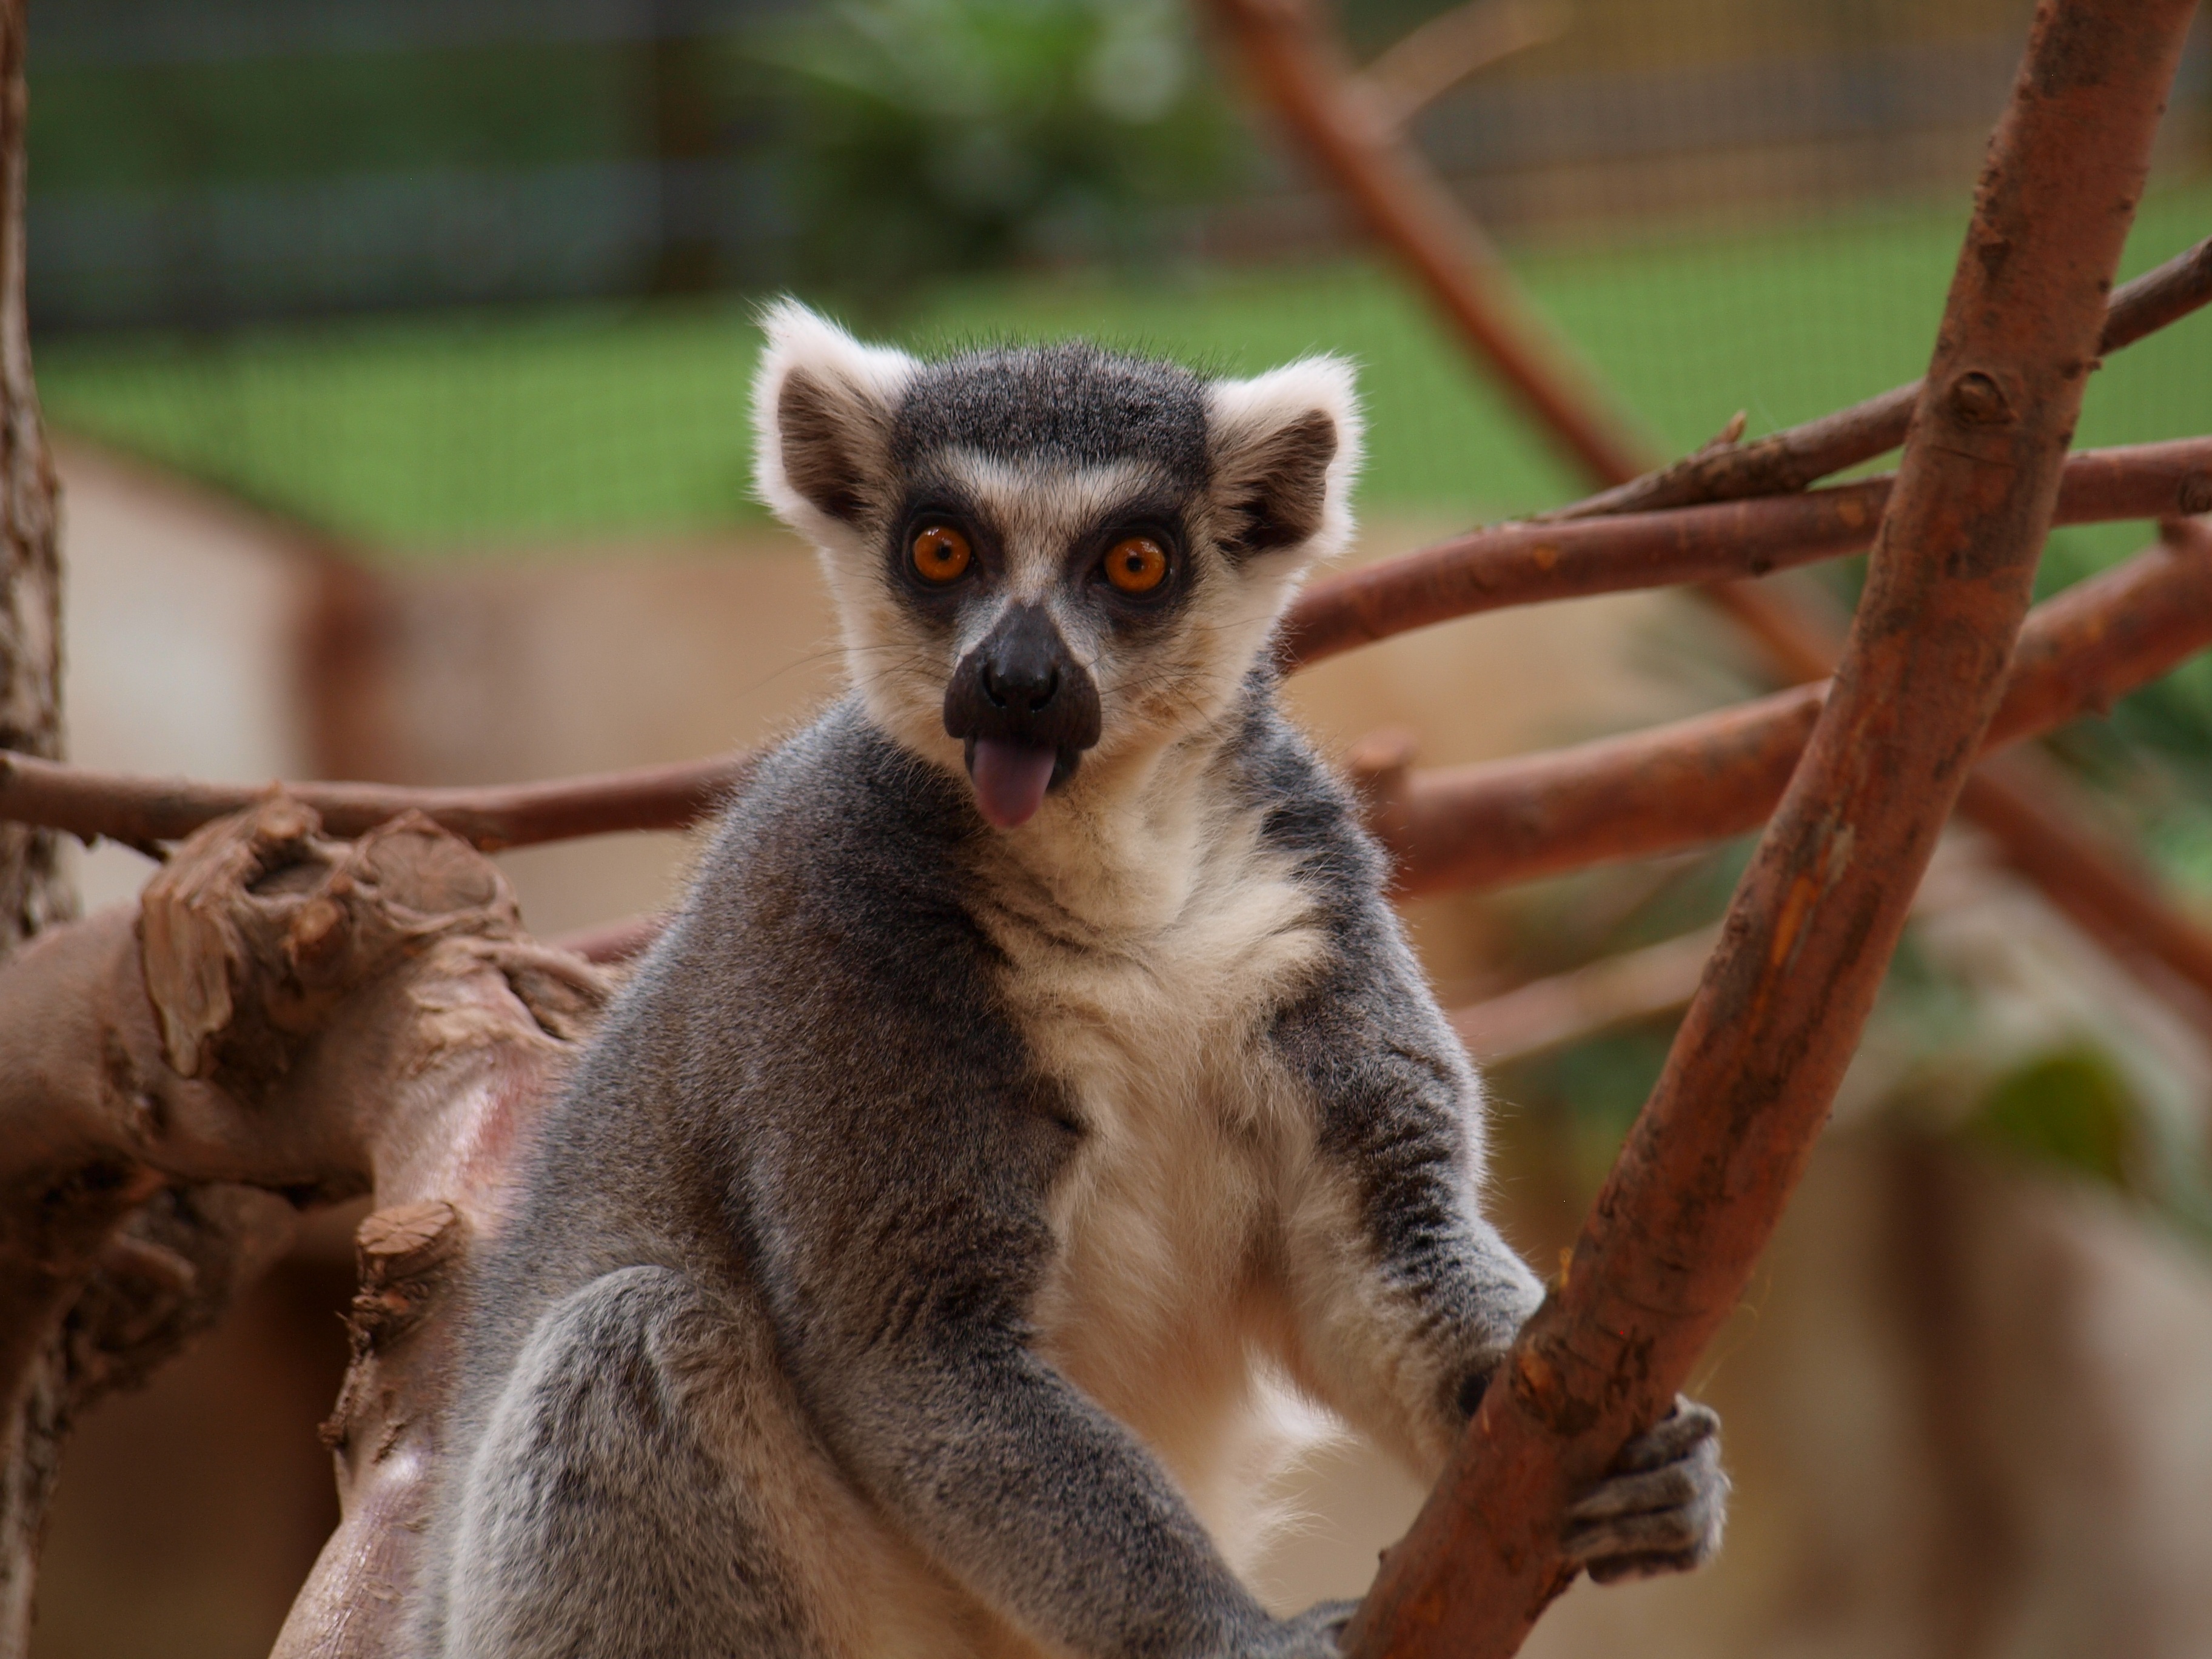 Lemur in the Zoo, Animal, Lemur, Nature, Wild, HQ Photo